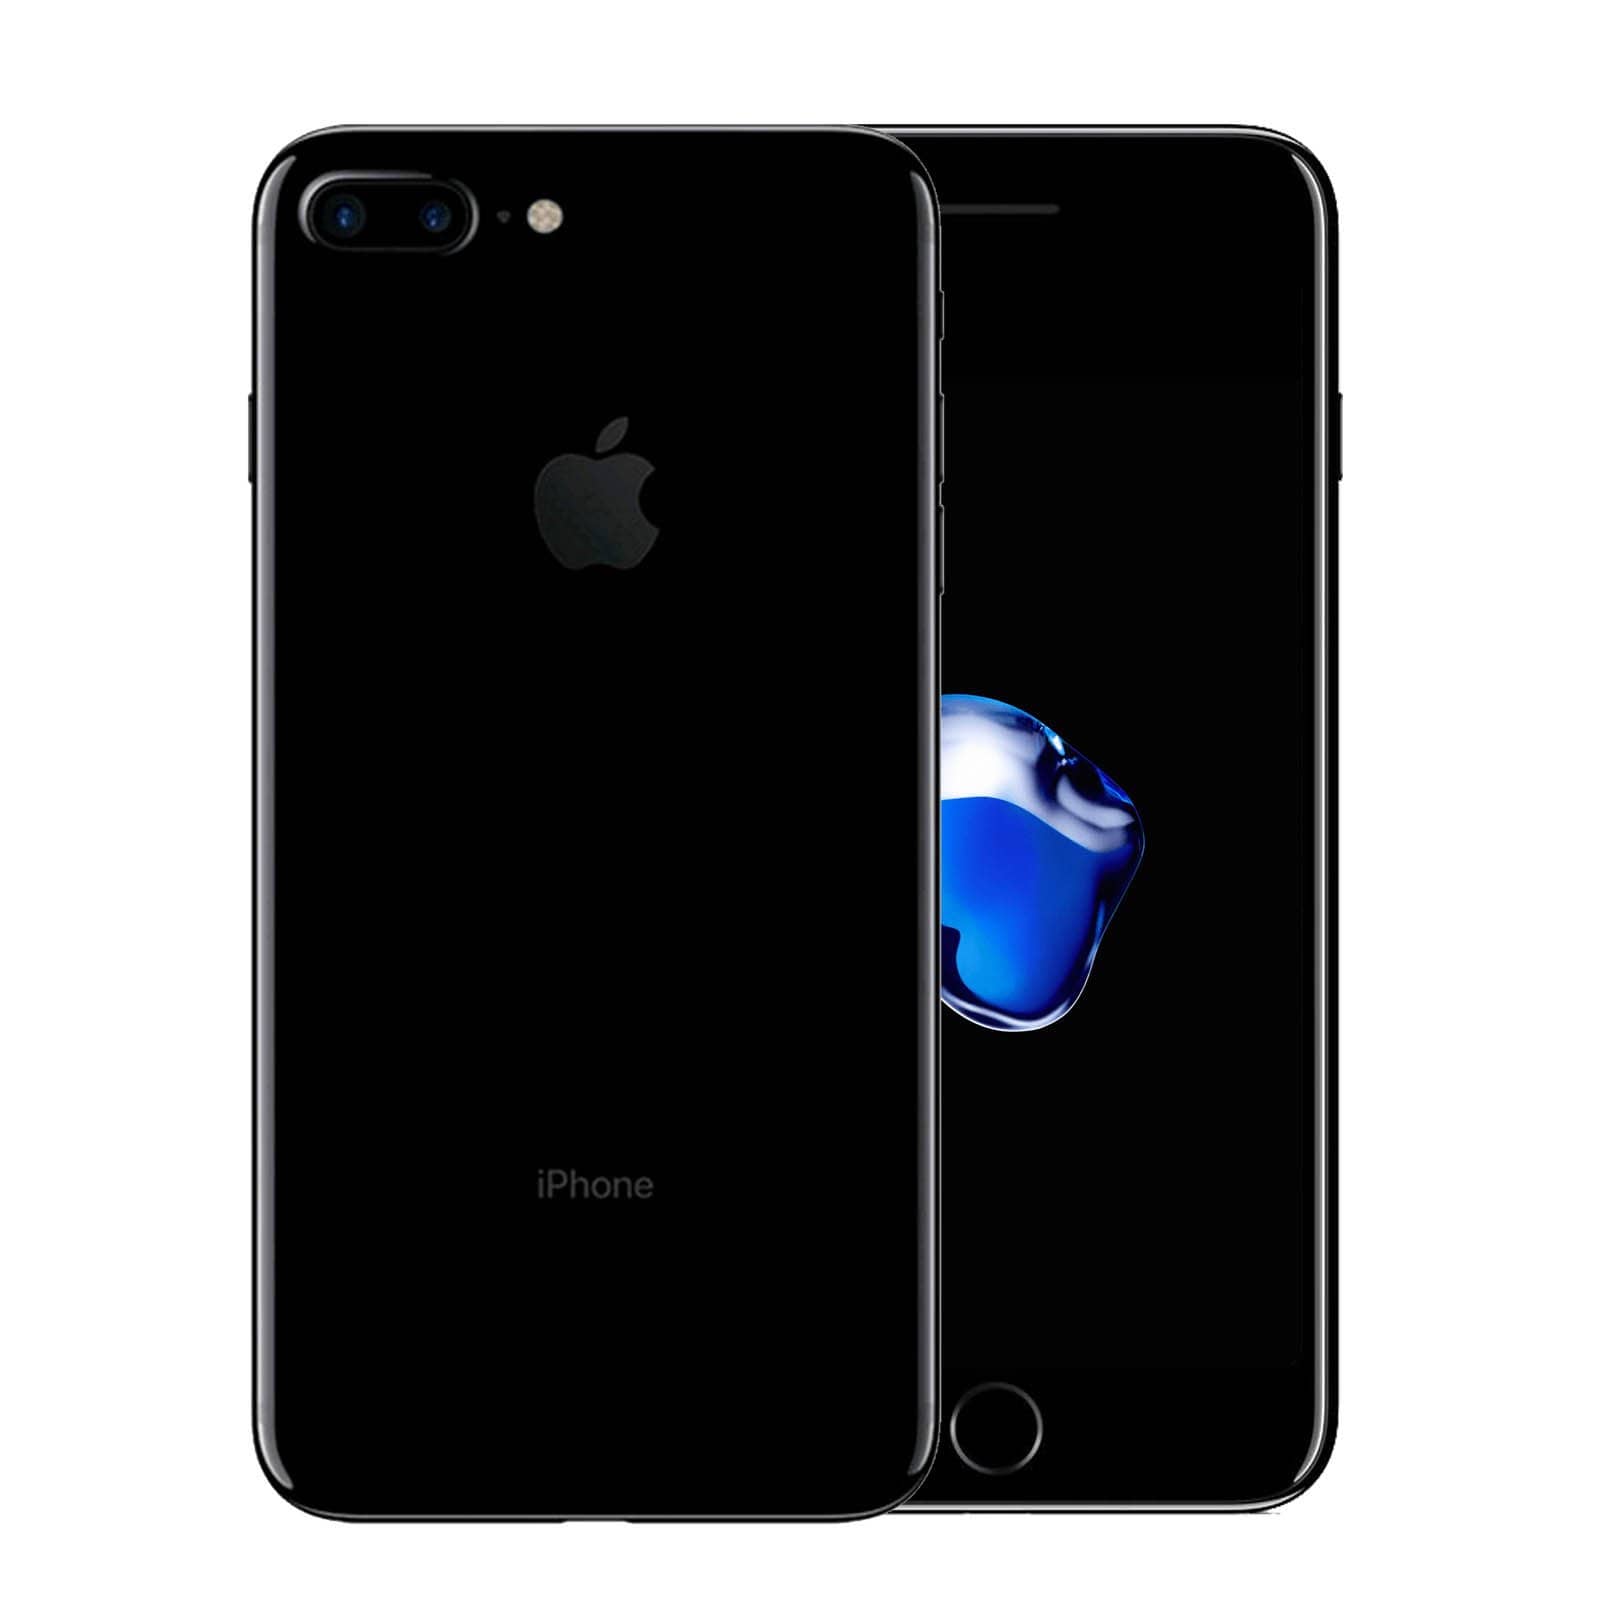 Apple iPhone 7 Plus 128GB Jet Black Very Good - Unlocked 128GB Jet Black Very Good